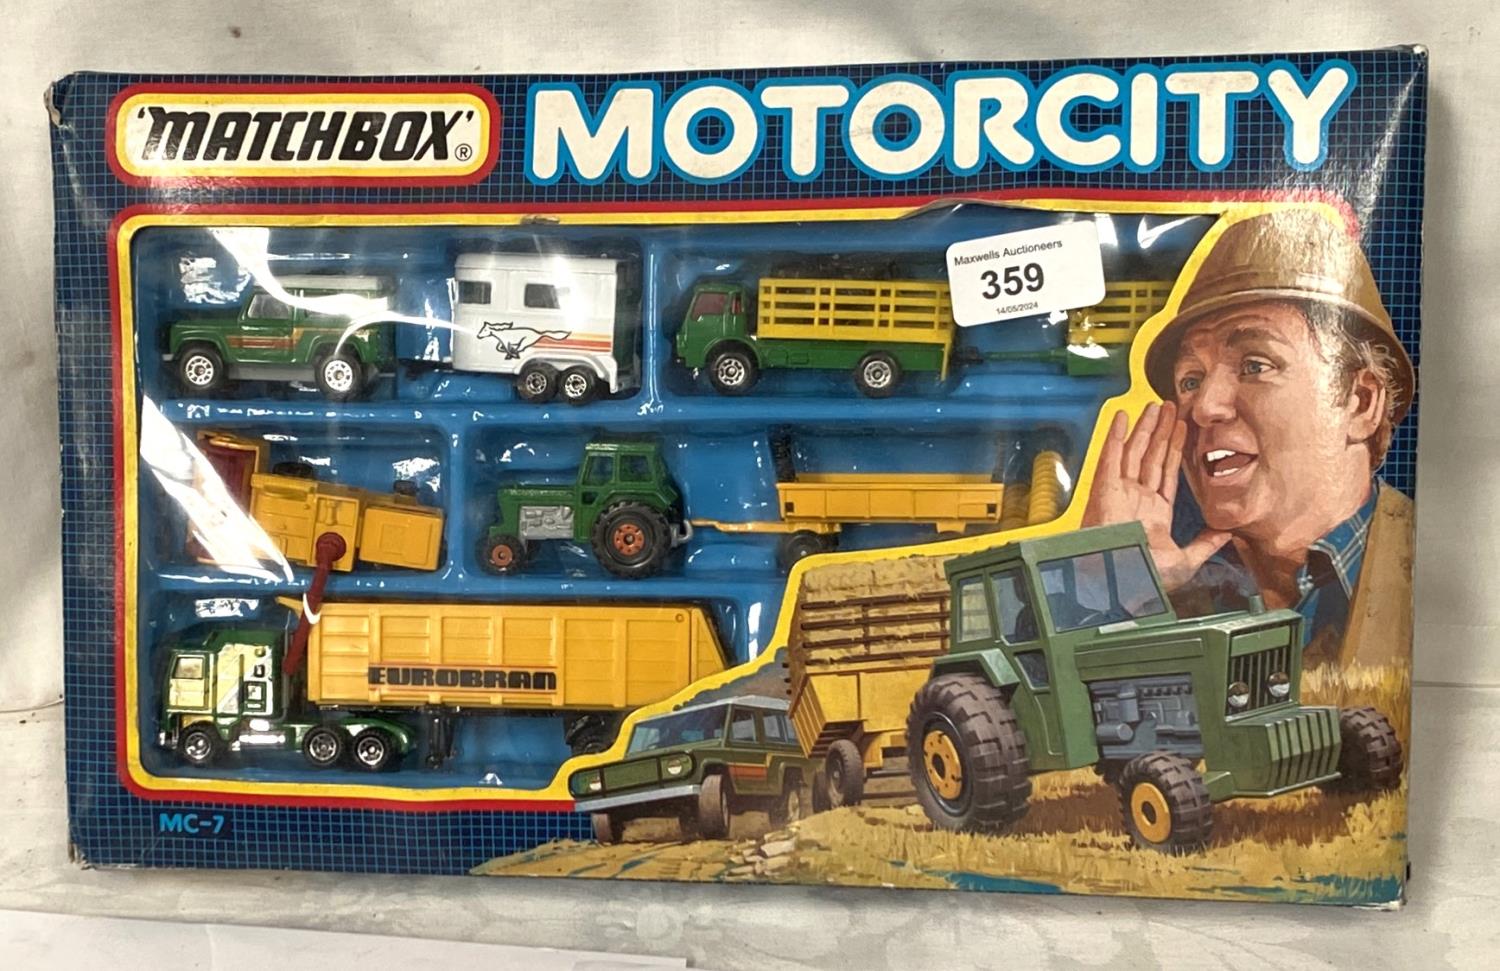 Matchbox Motorcity MC-7 set in original box